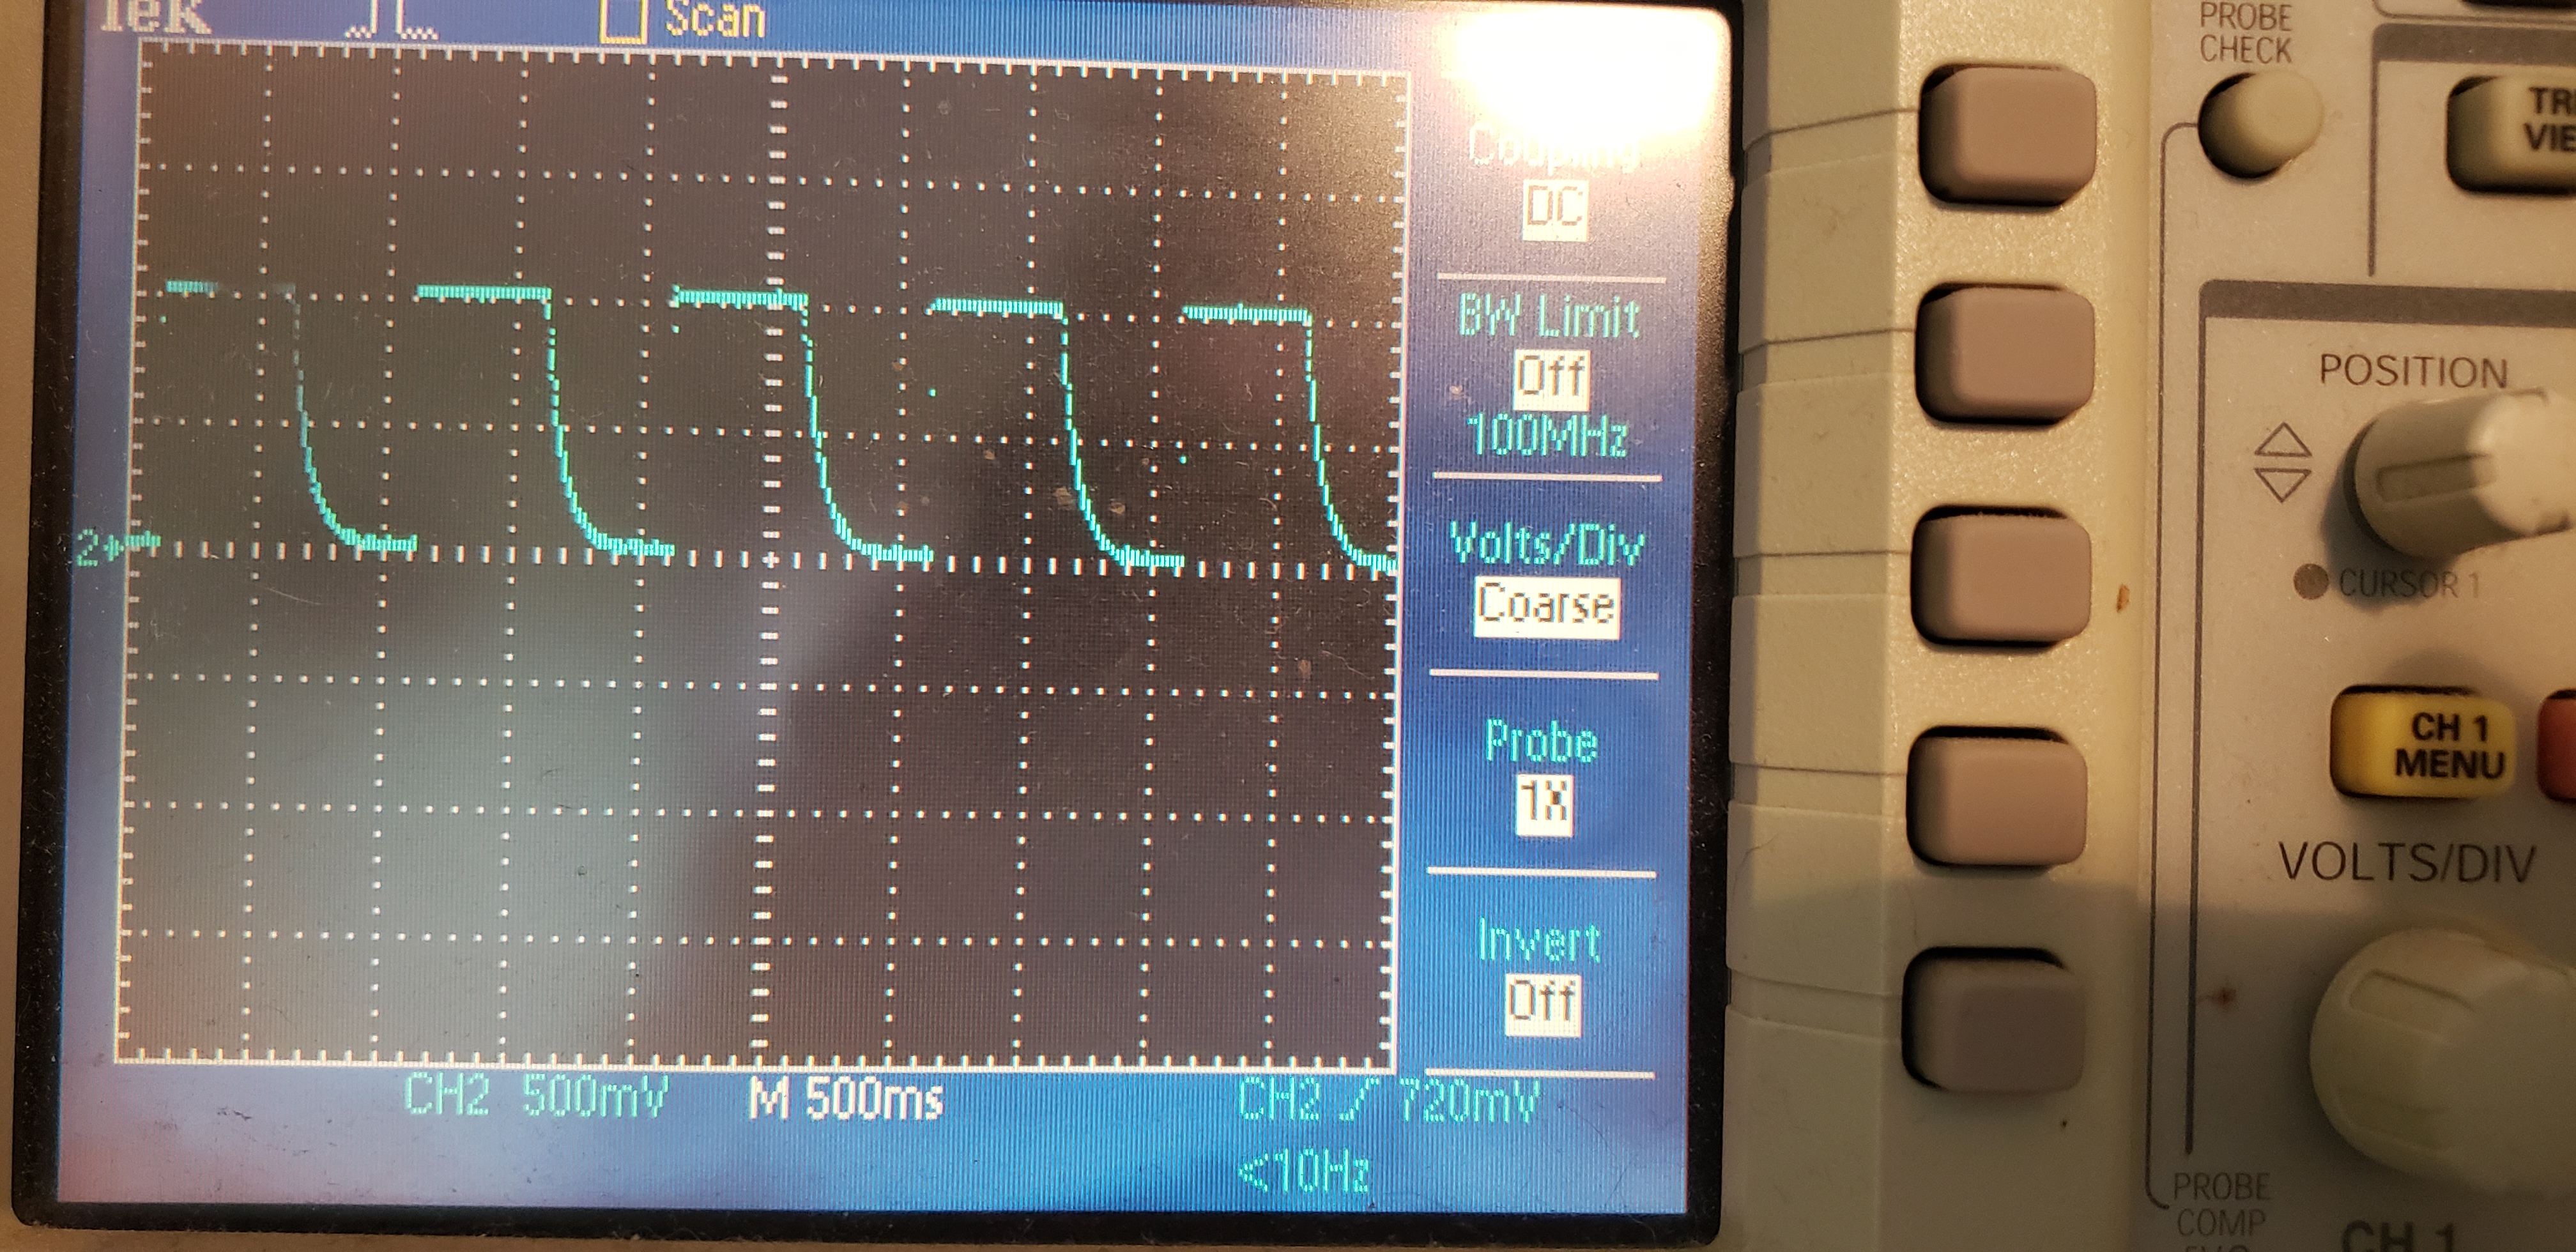 +5 V toggle benchmark test result viewed on oscilloscope